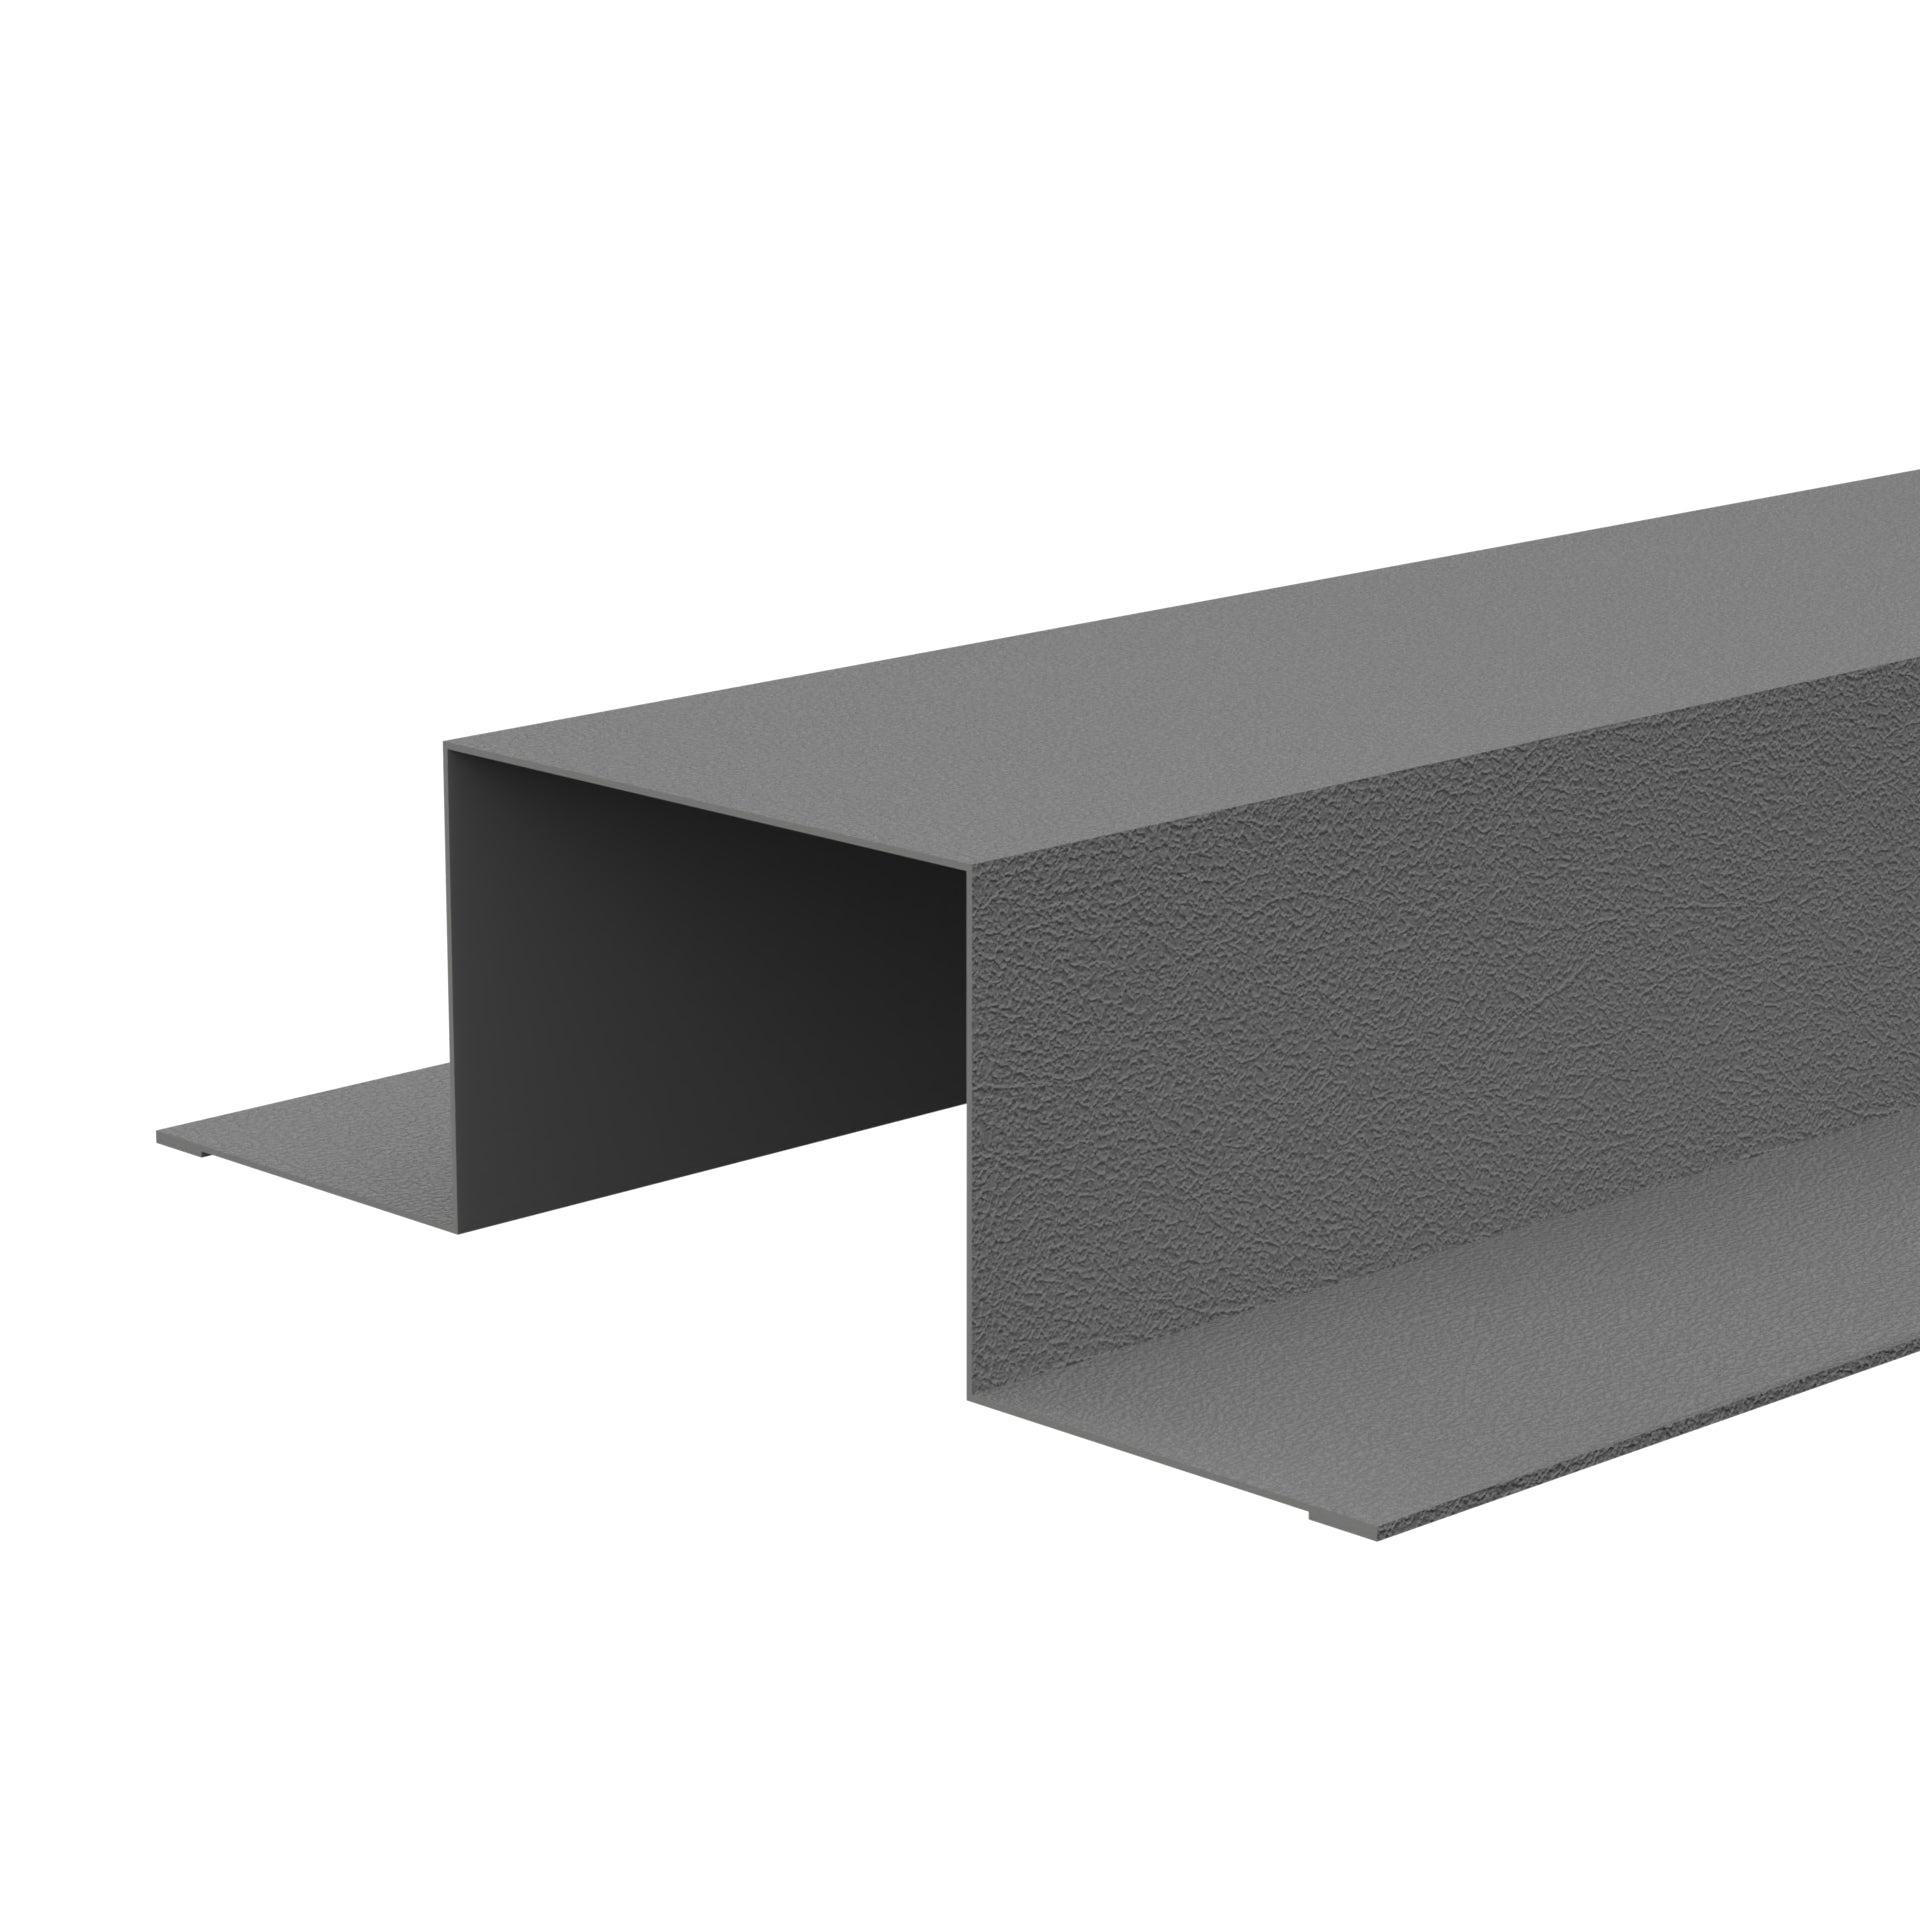 Product Standard Tophat Flashings 3m 0.7 PVC Plastisol in Merlin Grey image